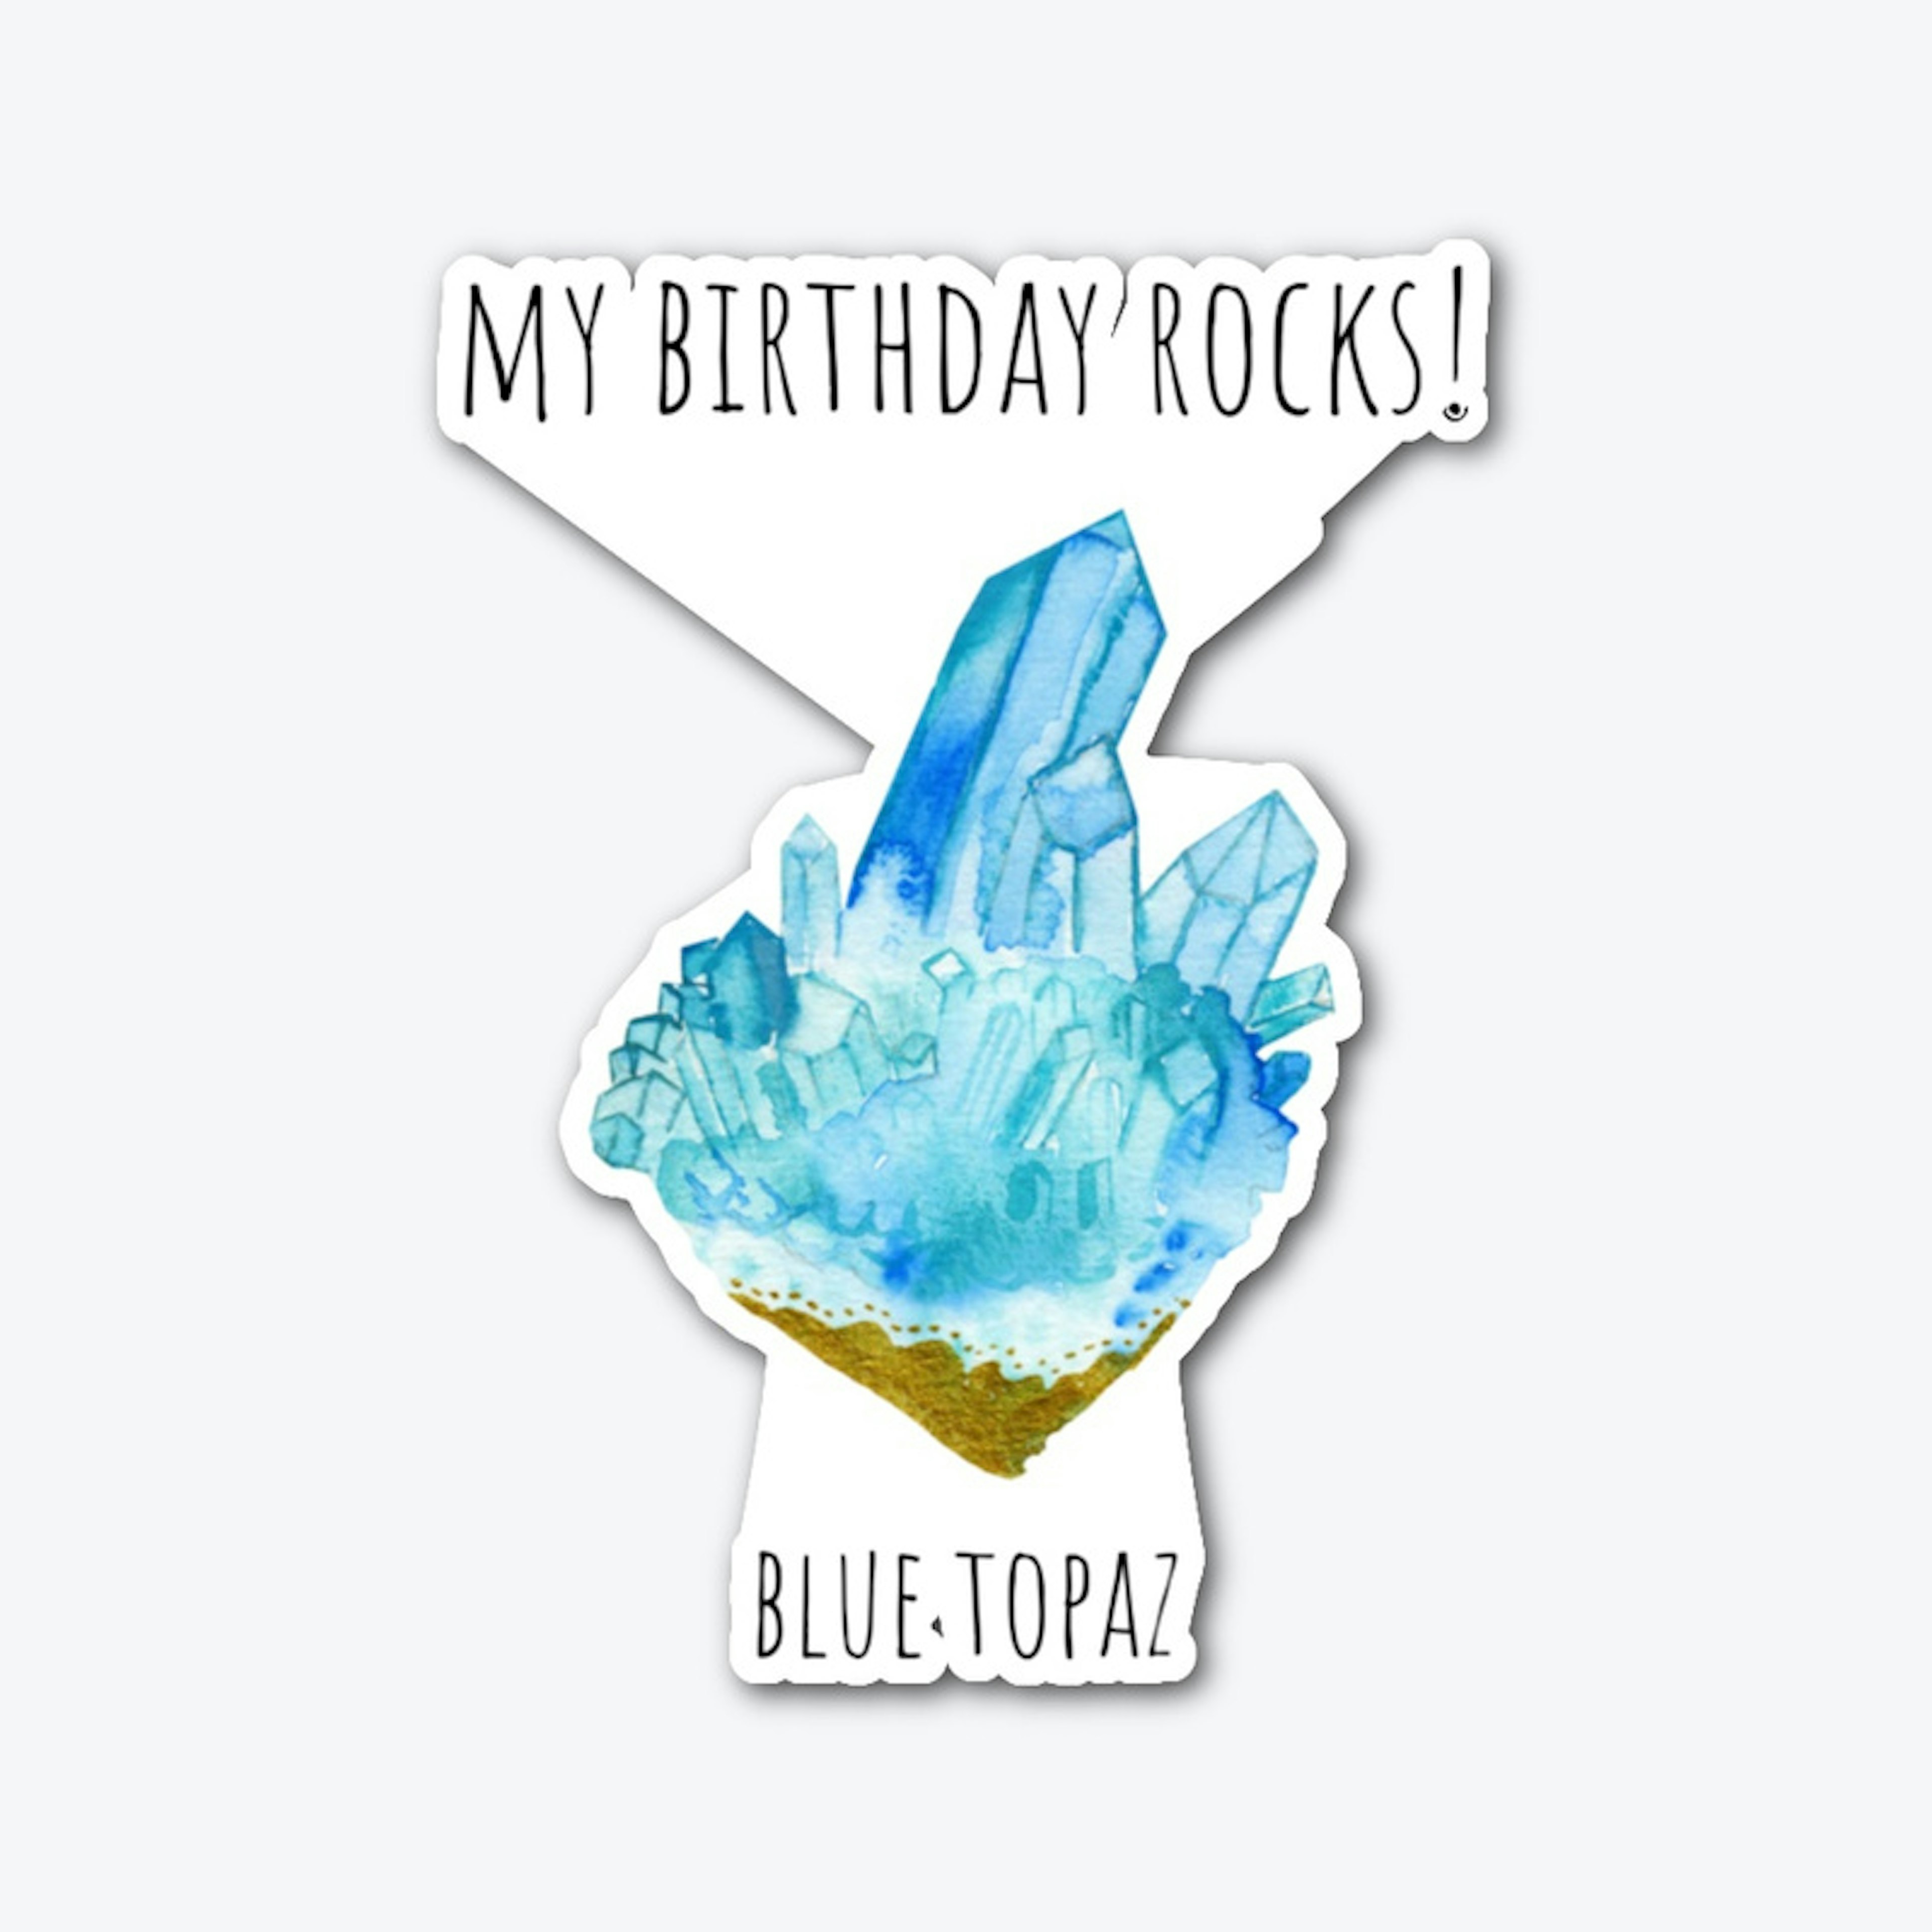 My Birthday Rocks! (December)